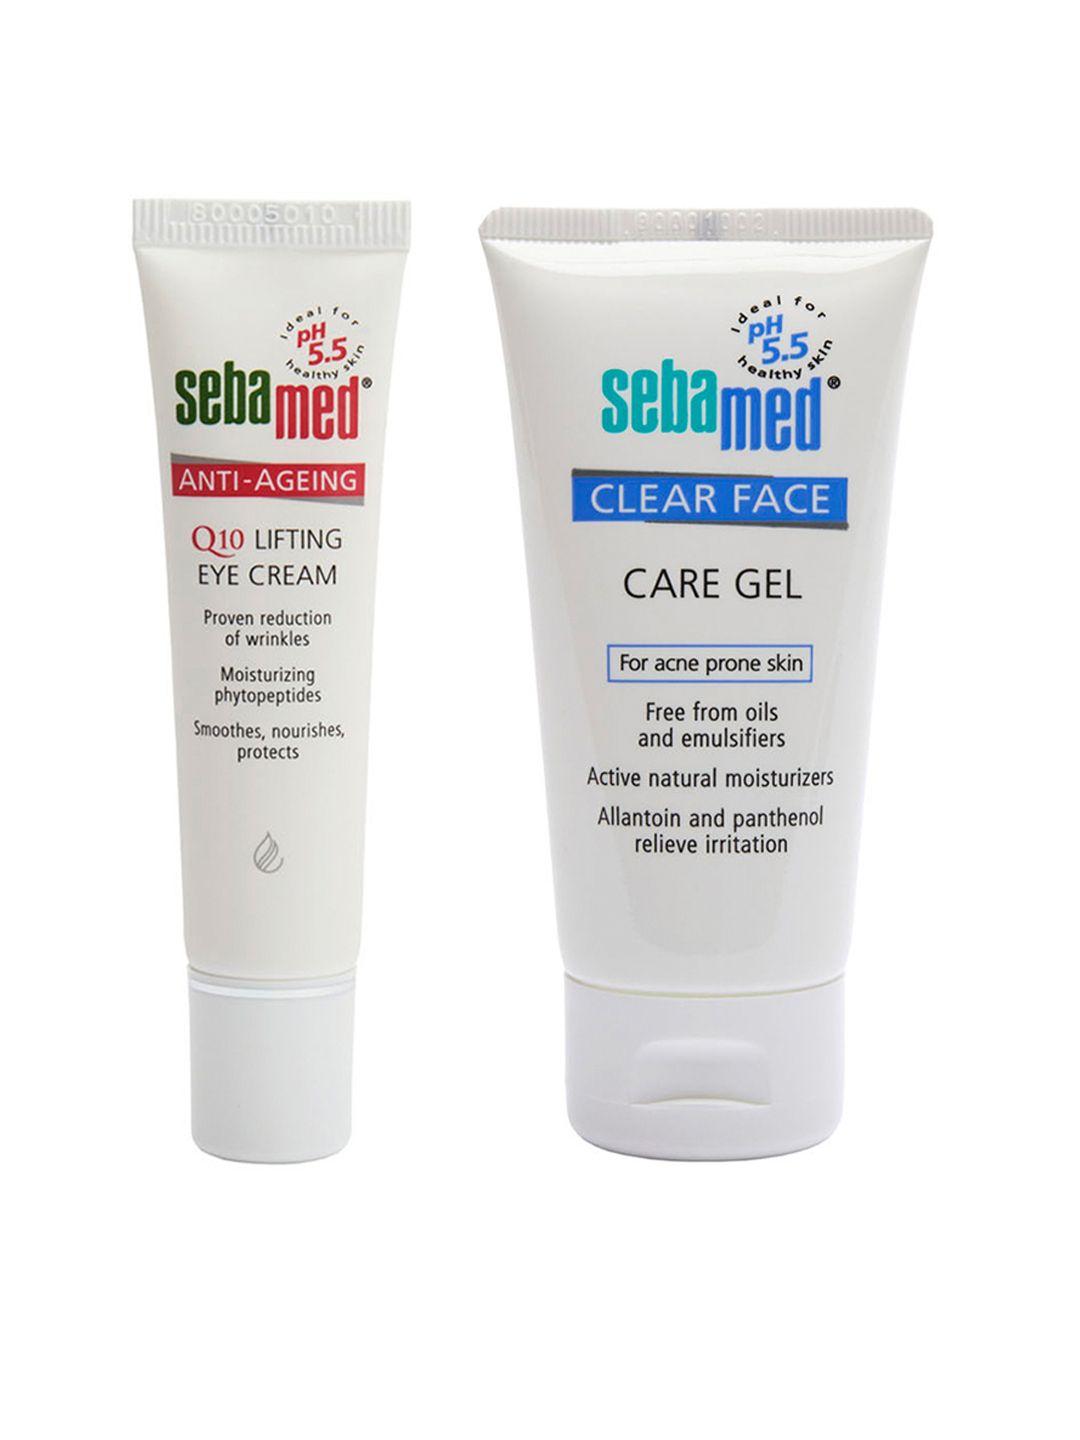 sebamed set of anti-aging q10 lifting eye cream & clear face gel